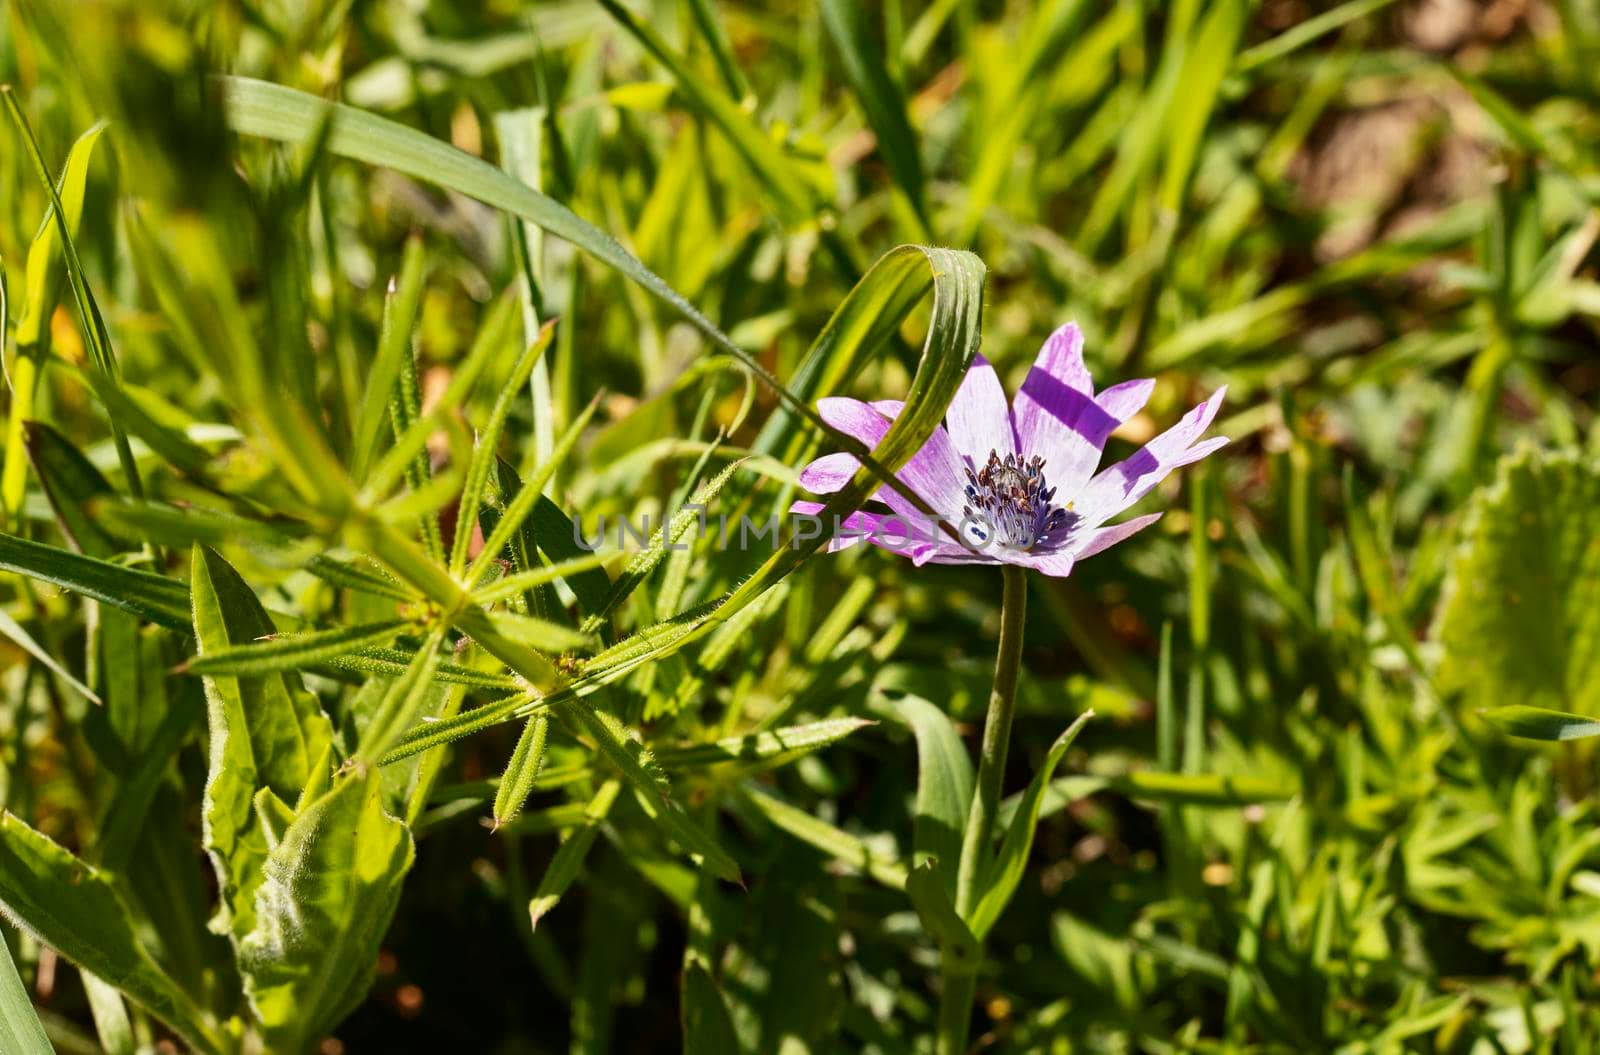 Anemone purple flower by victimewalker